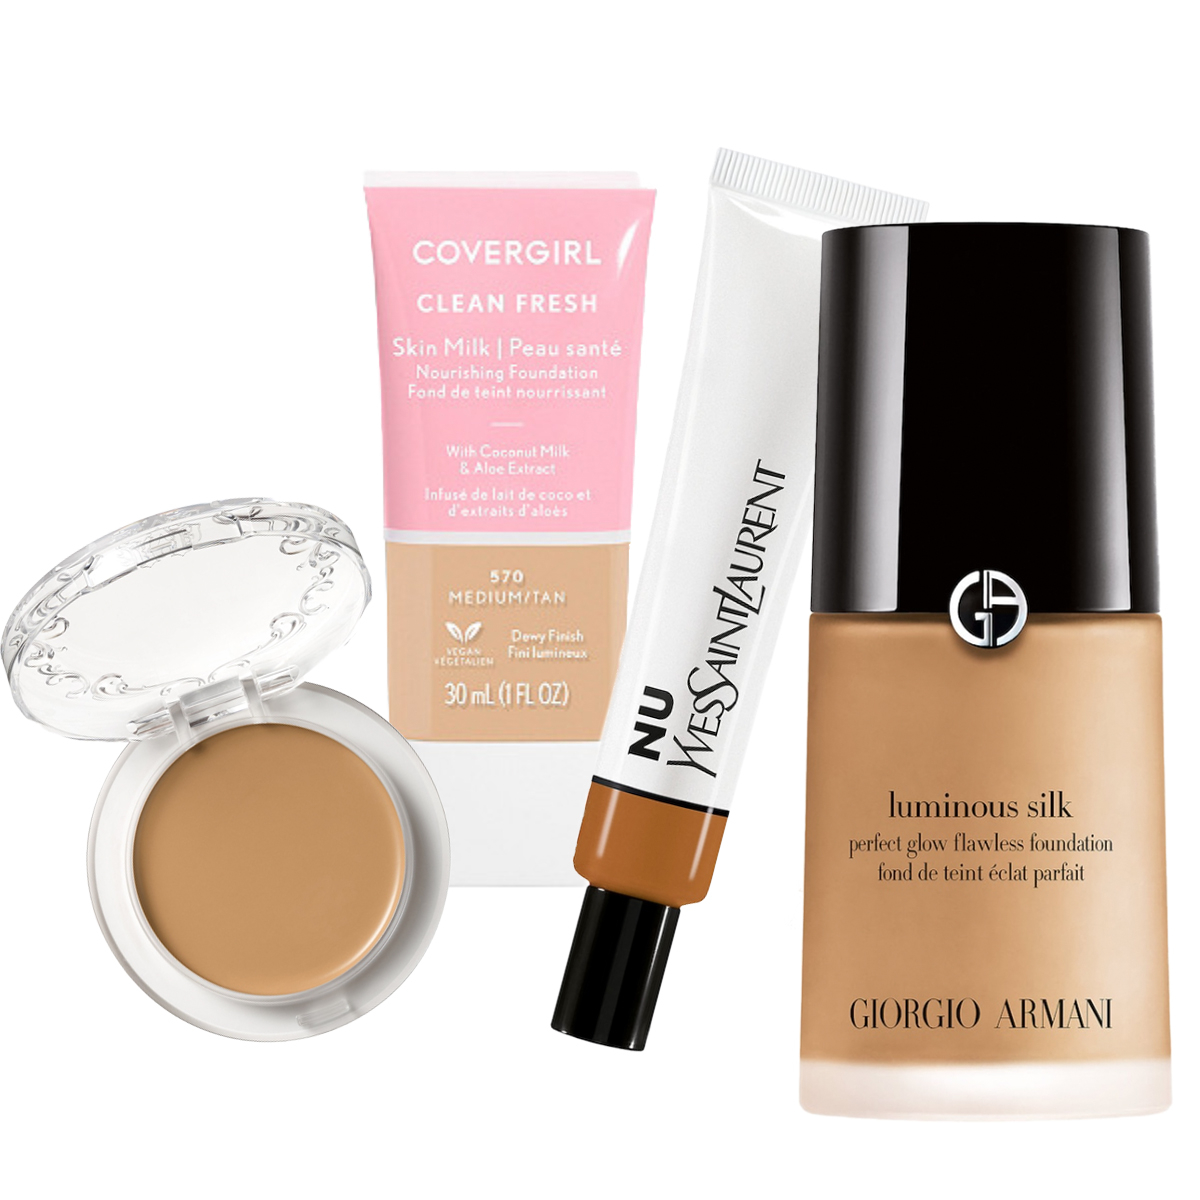 New Chanel Foundation and Concealer! #makeup #tiktokmakeup #foryou #ov